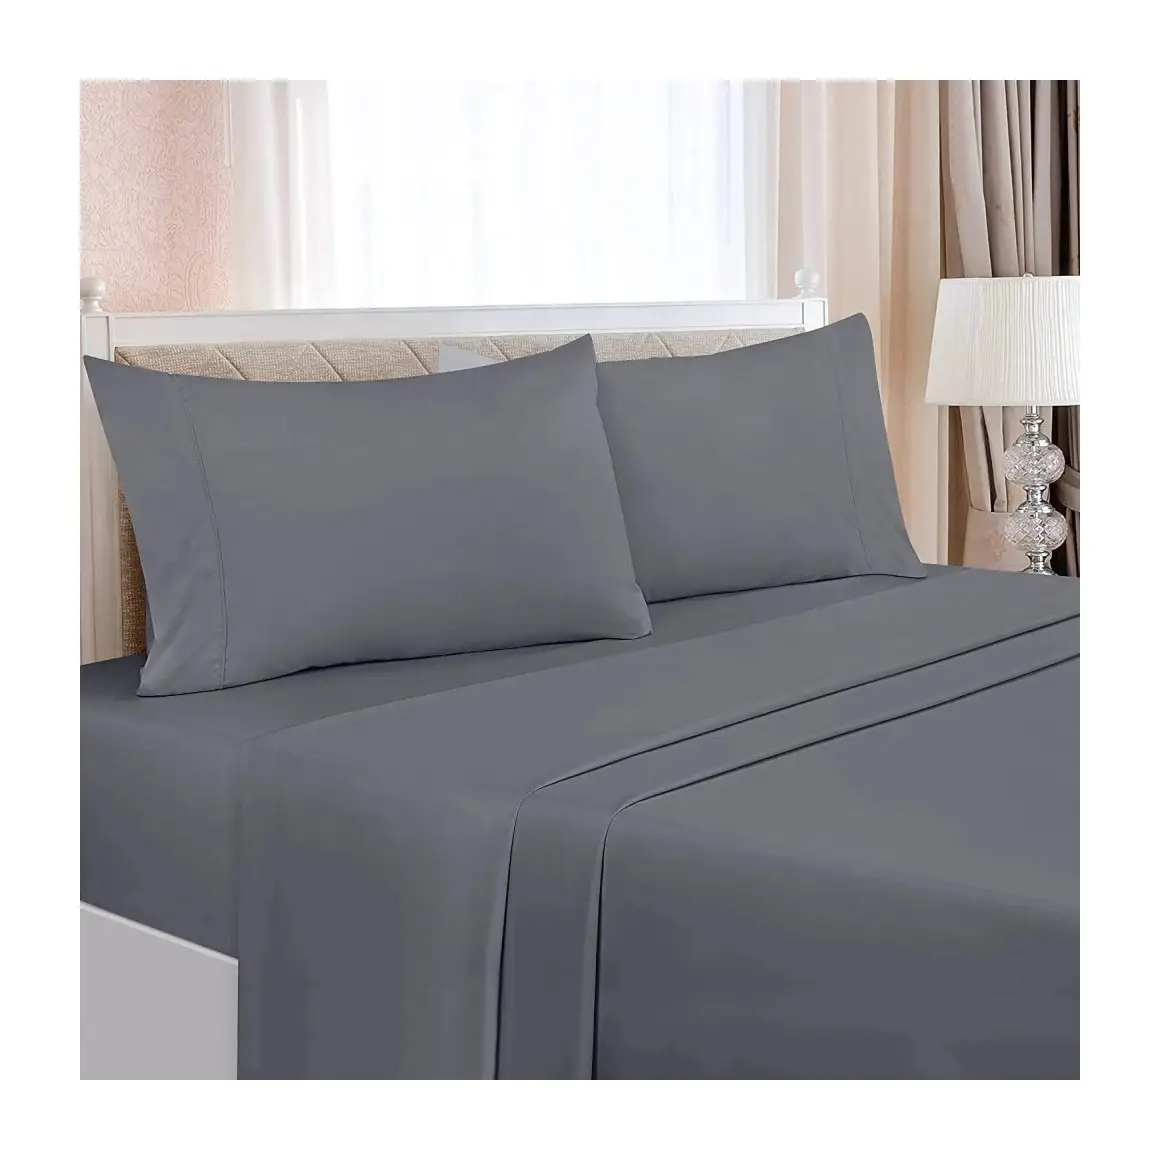 Hotel Queen Bed Sheets Set 4 Piece Bedding Set Brushed Microfiber Shrinkage and Fade Resistant 4PCS Bedsheet